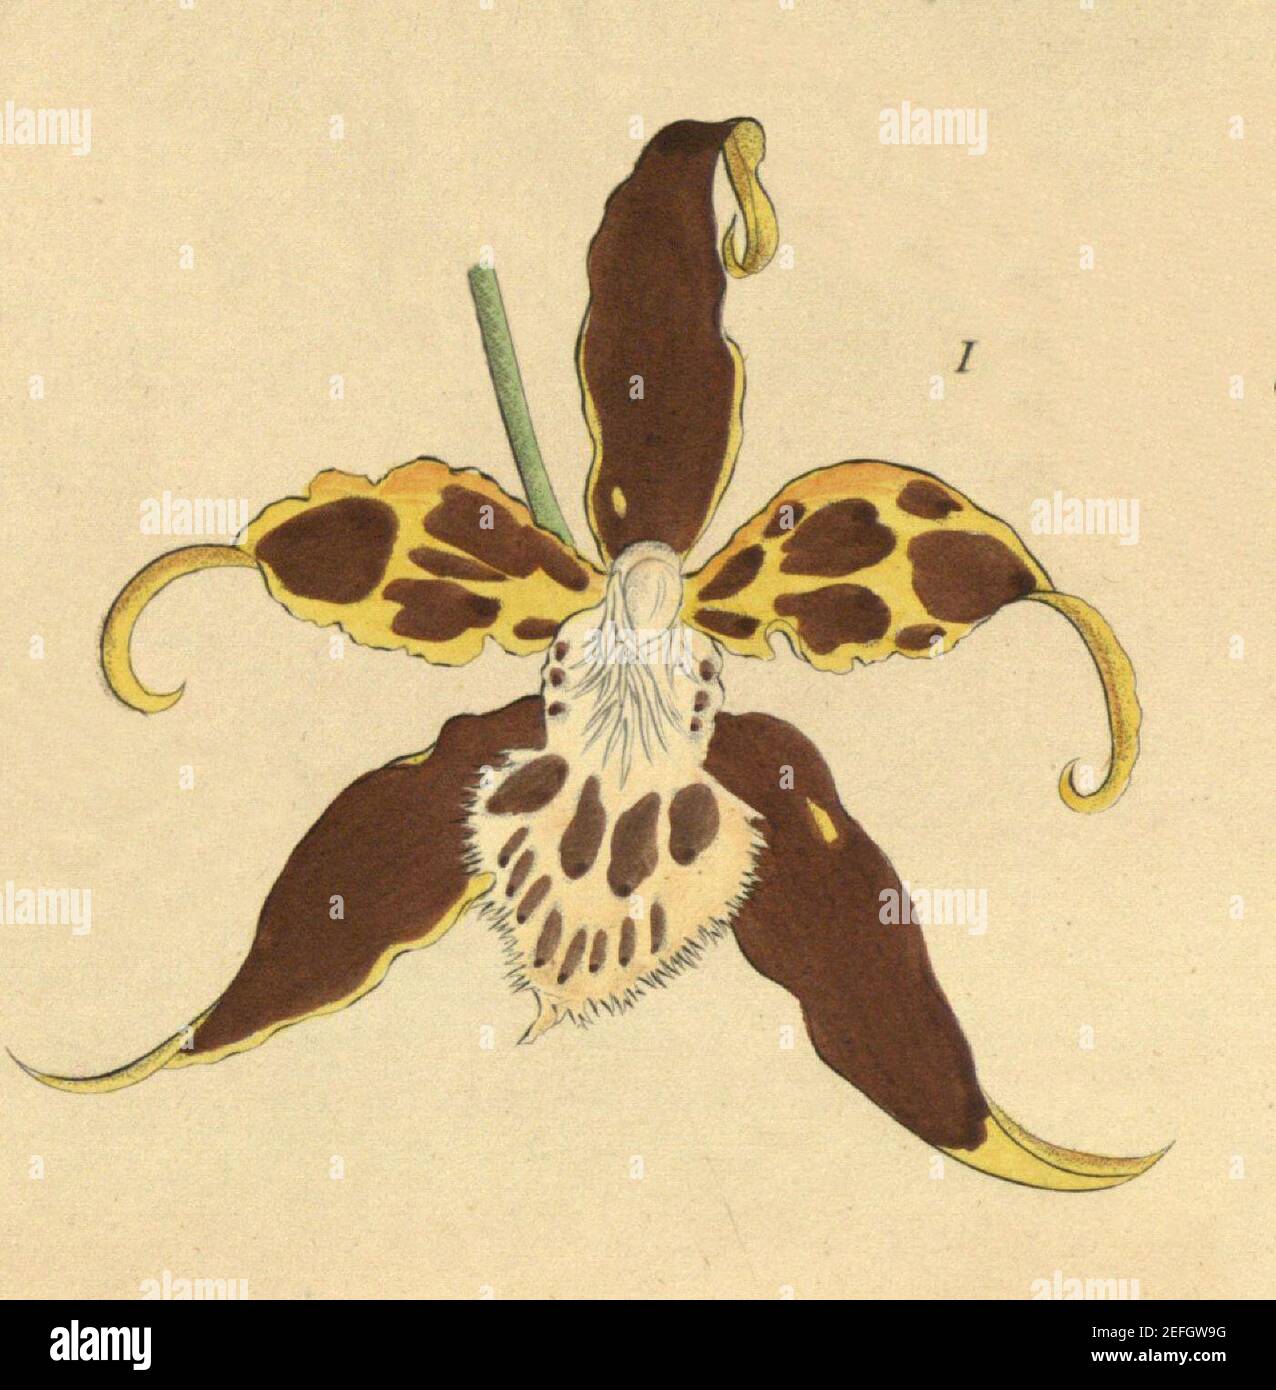 Odontoglossum hallii - fig. 1, cutout from Xenia 1-63 (1858). Stock Photo